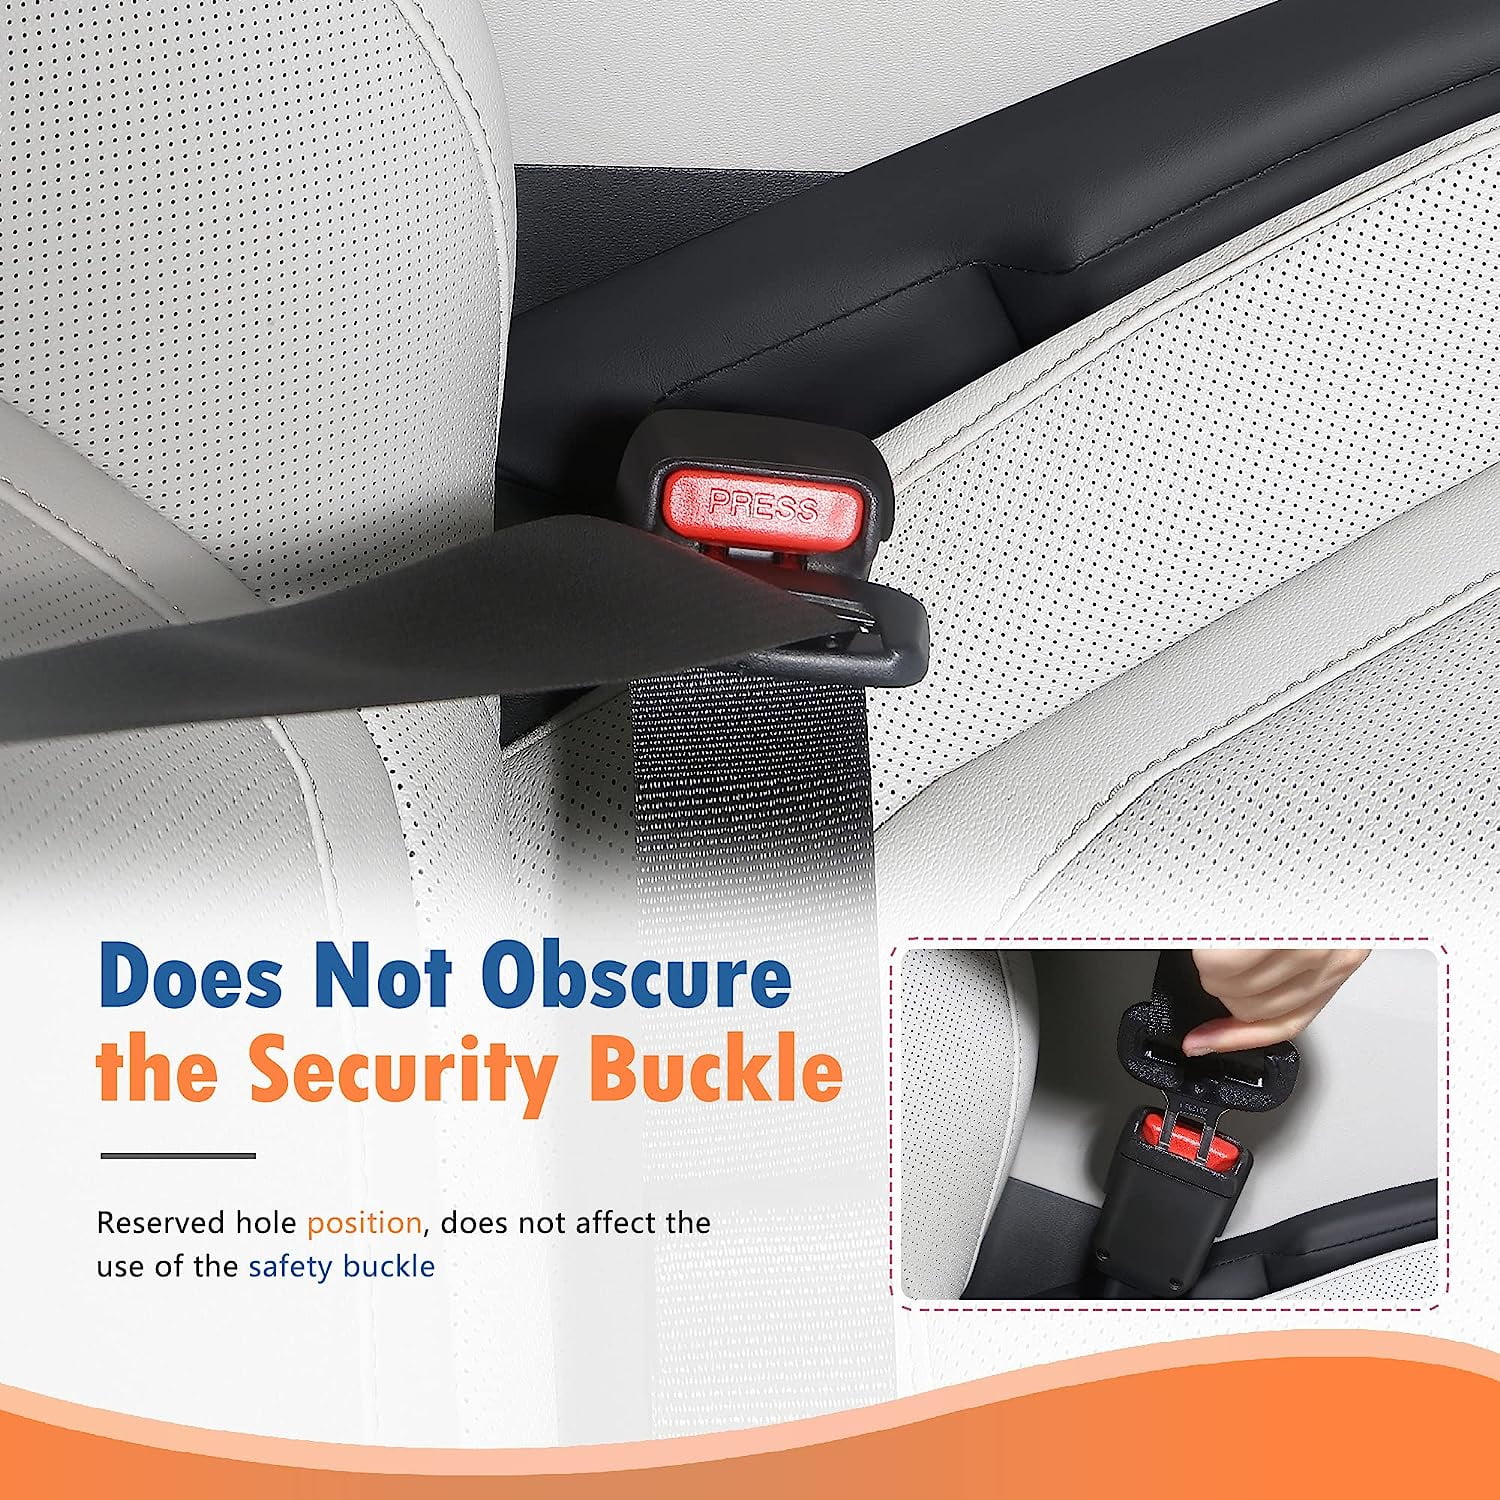 NUZYZ Car Seat Gap Filler Universal Soft Leather Interior Accessories Seat  Gap Plug for Car SUV Truck